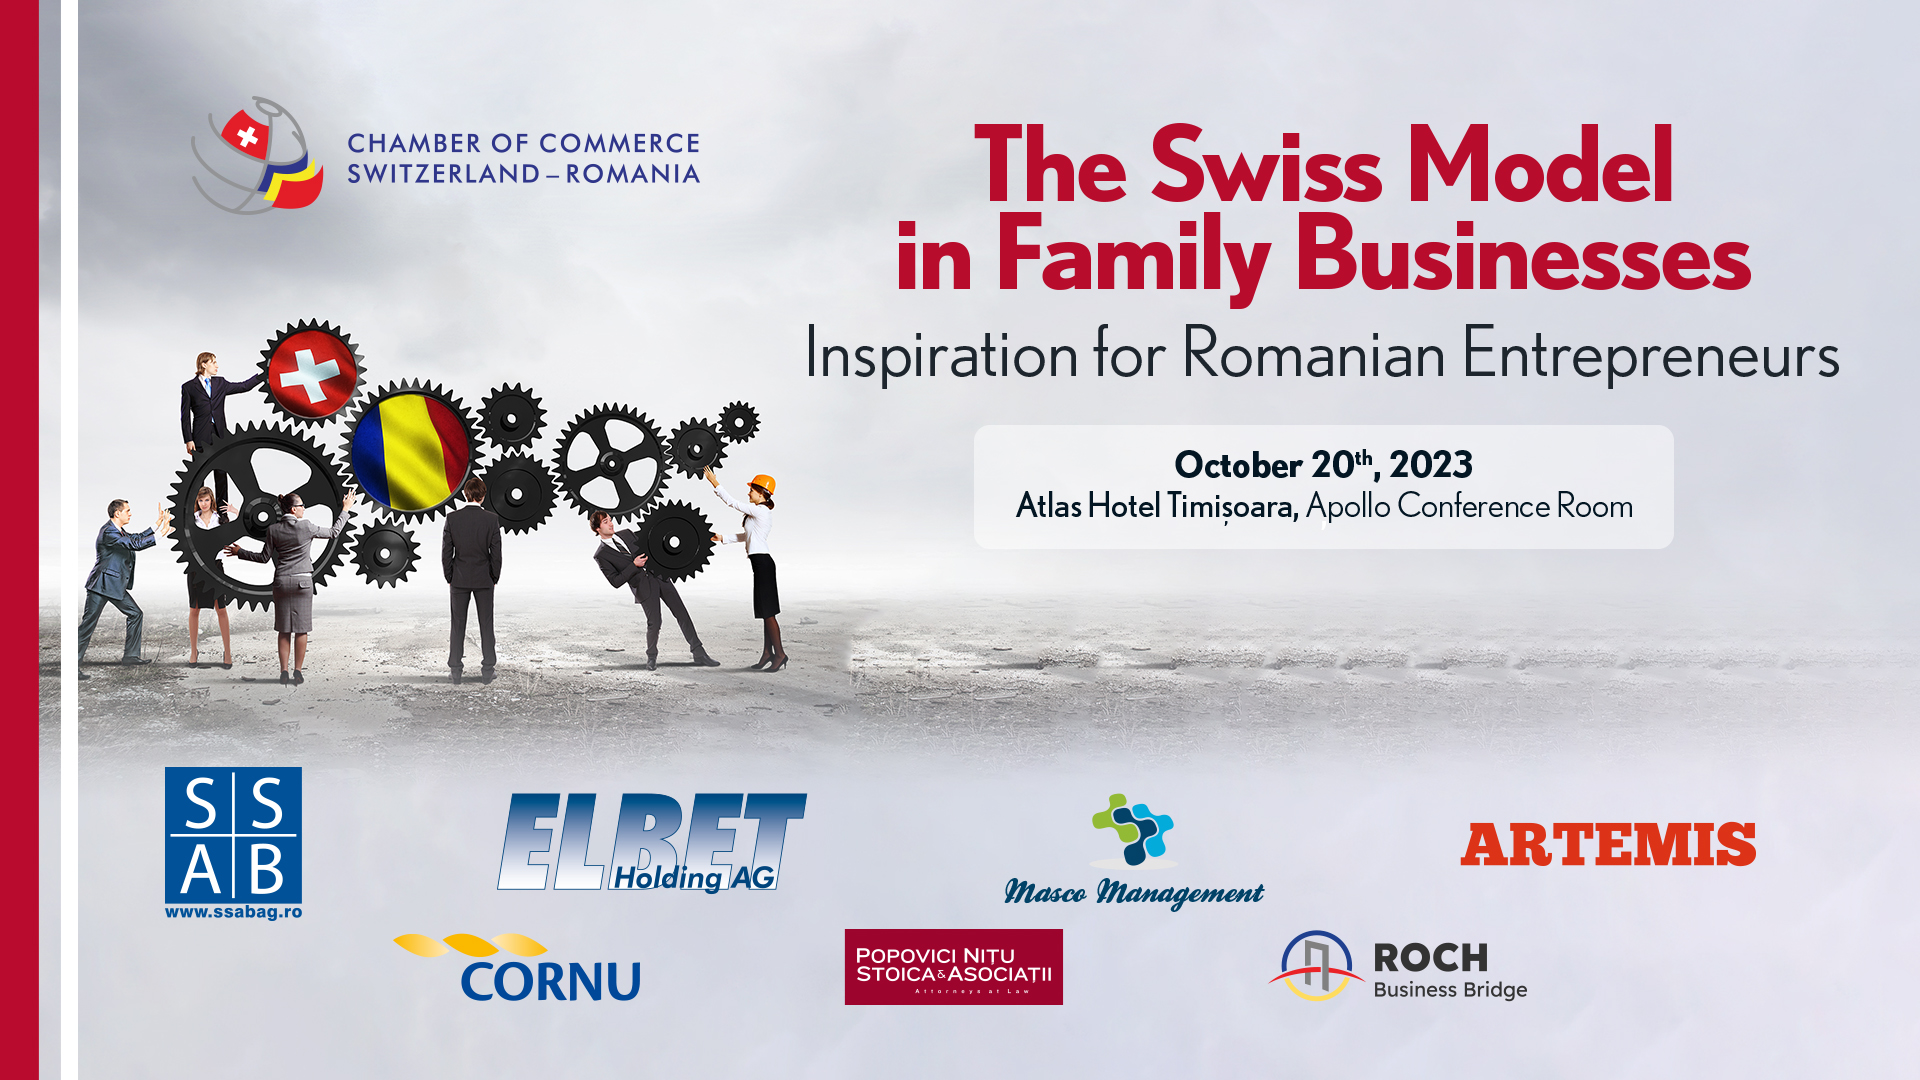 The Swiss Model in Family Business, Inspiration for Romanian Entrepreneurs